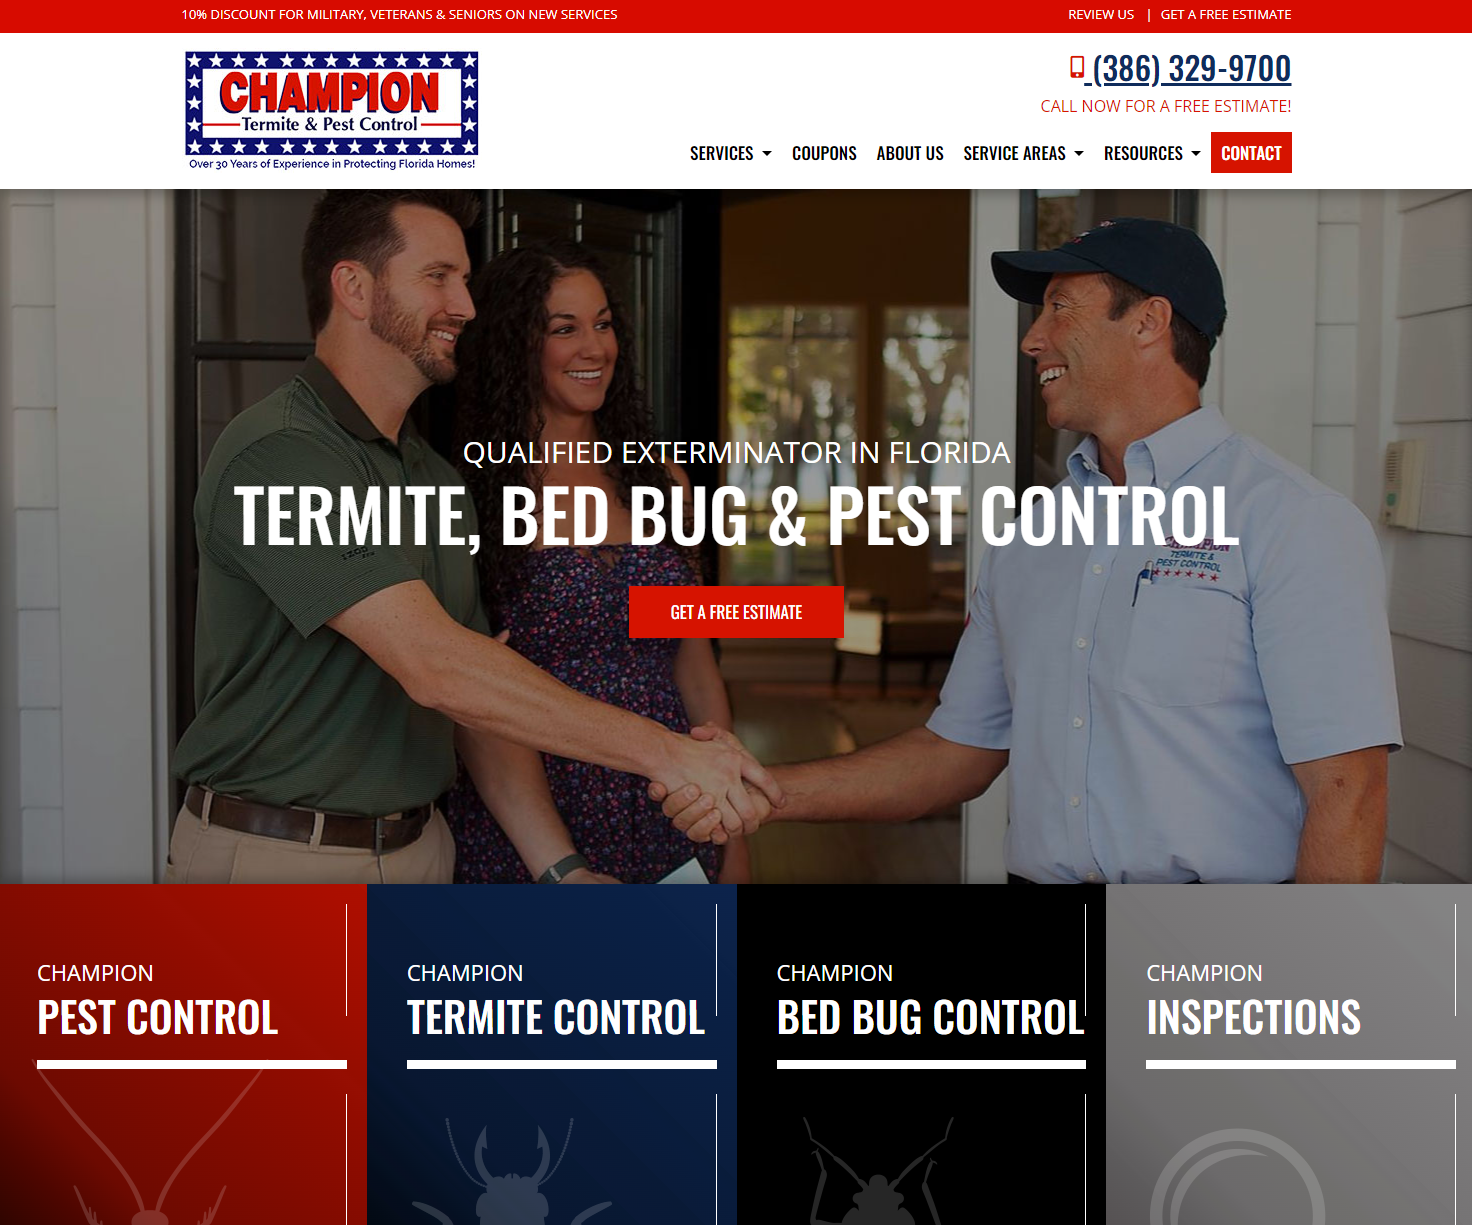 Champion Termite & Pest Control